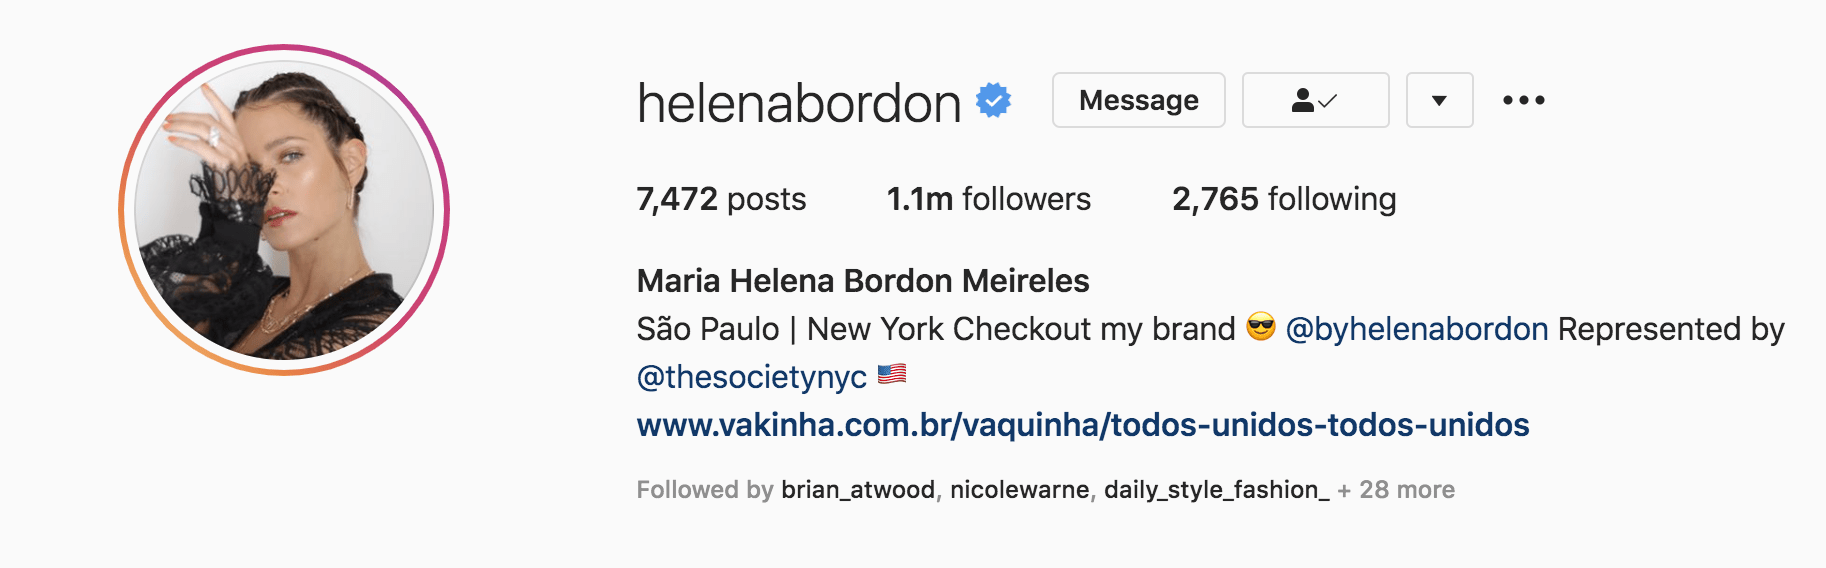 Top Fashion Influencers - Helena Bordon